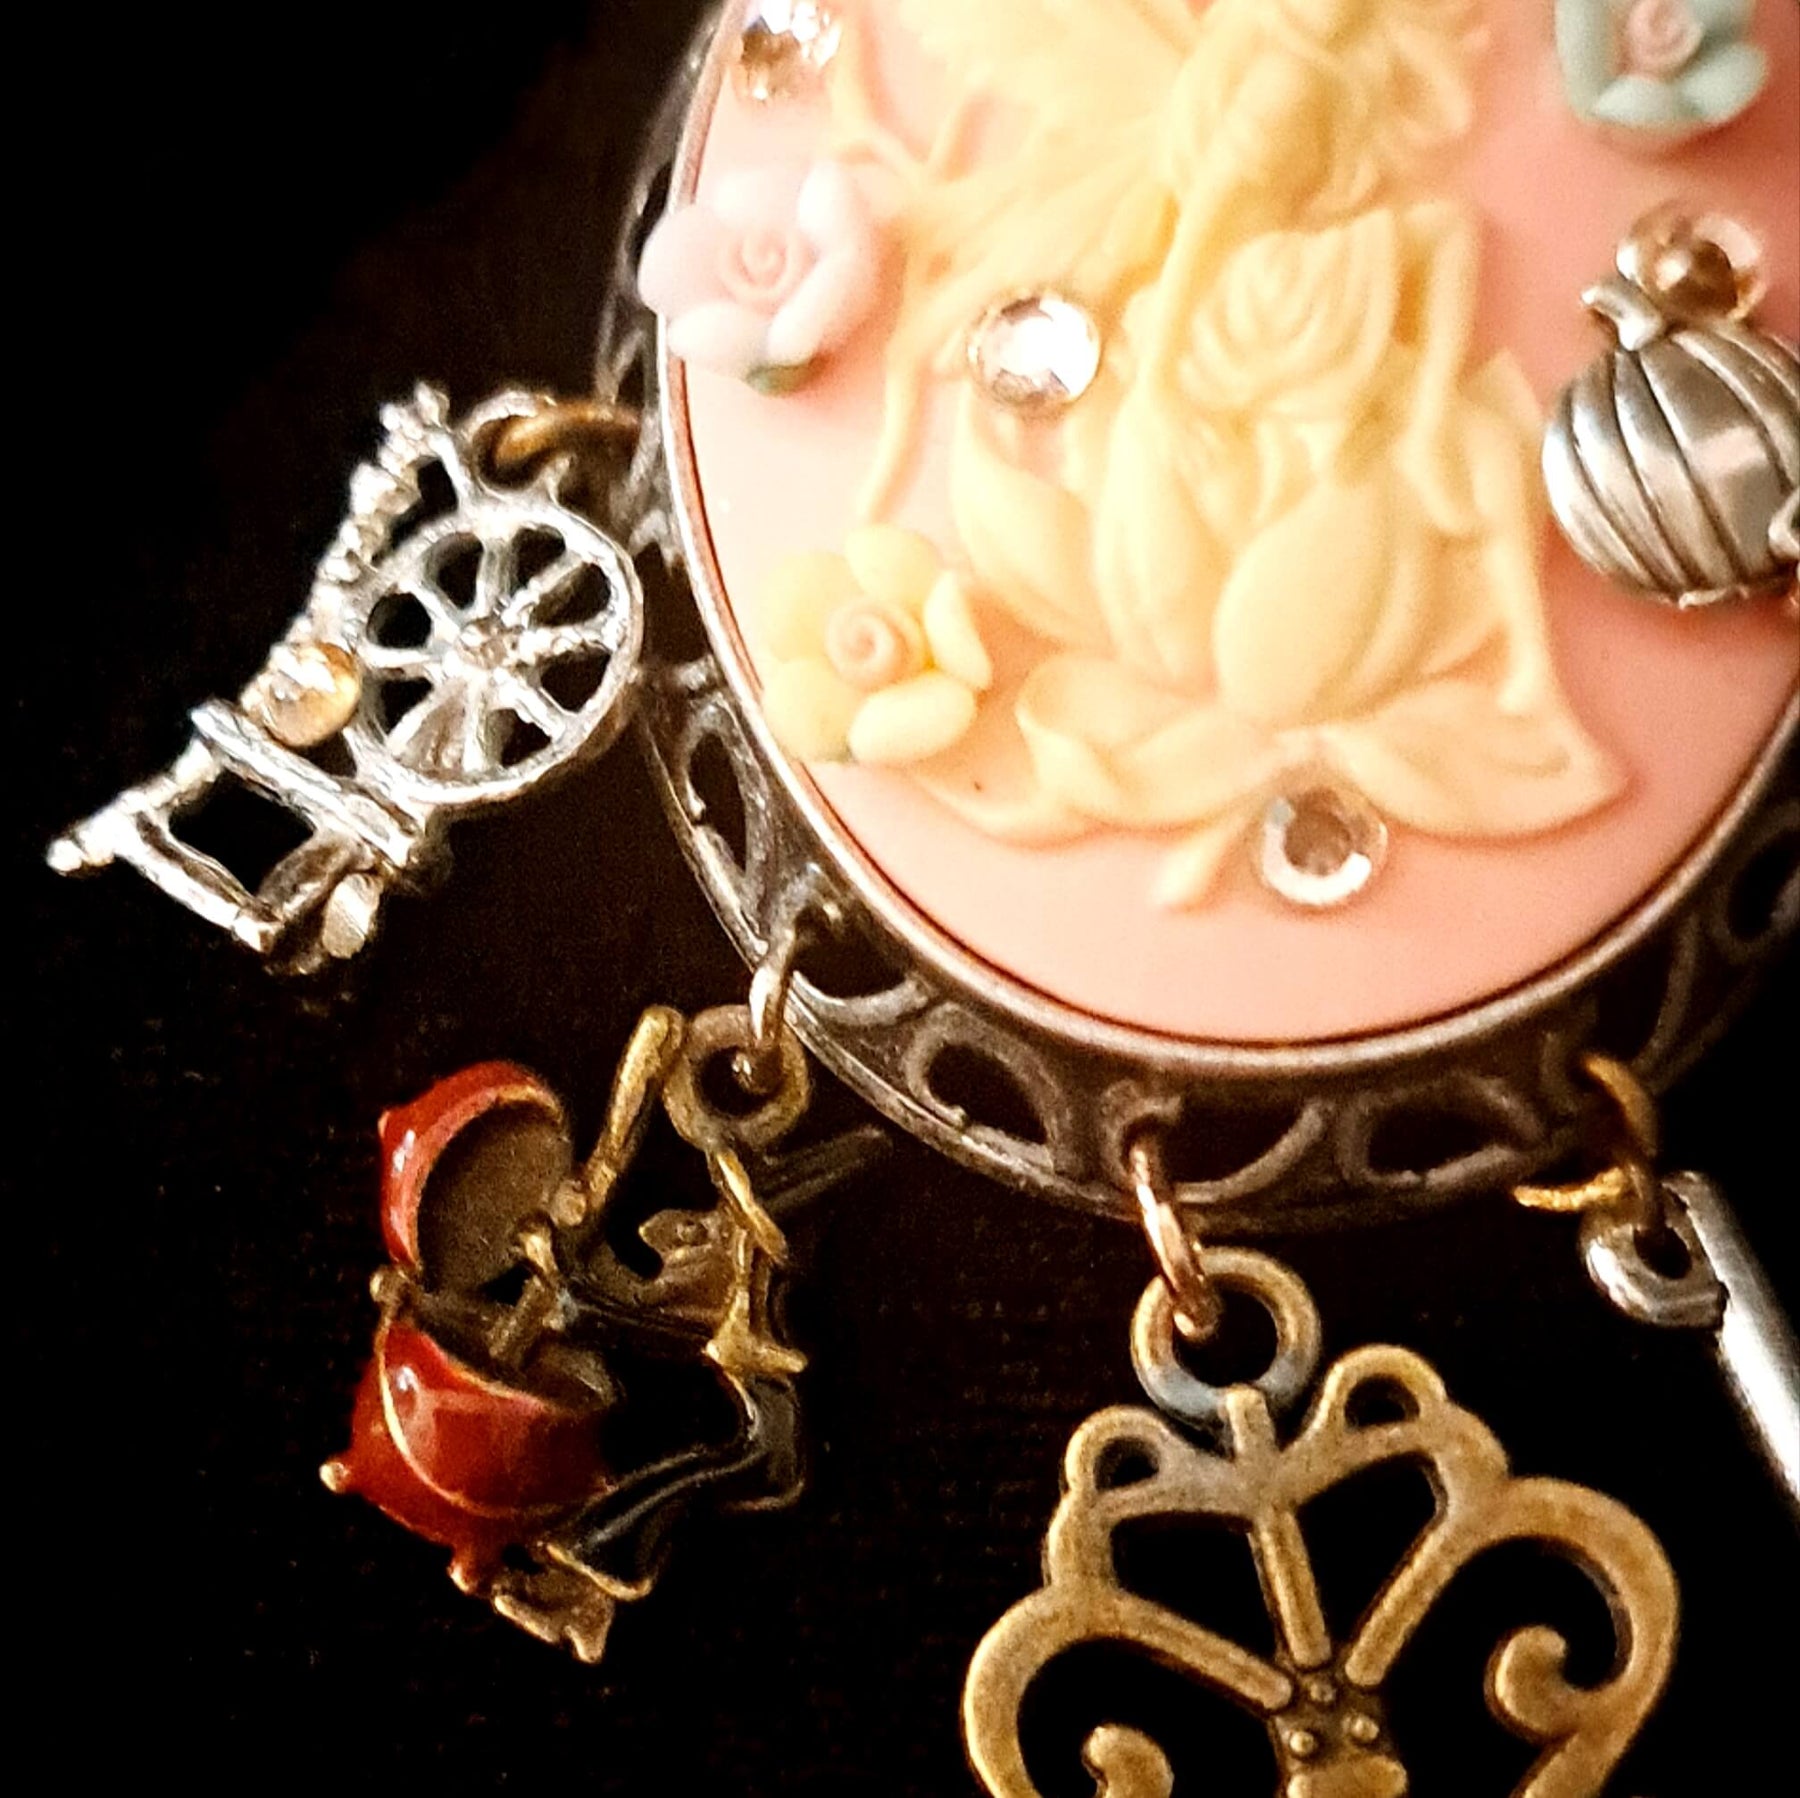 Fairy Cameo Fantasy Pendant Necklace